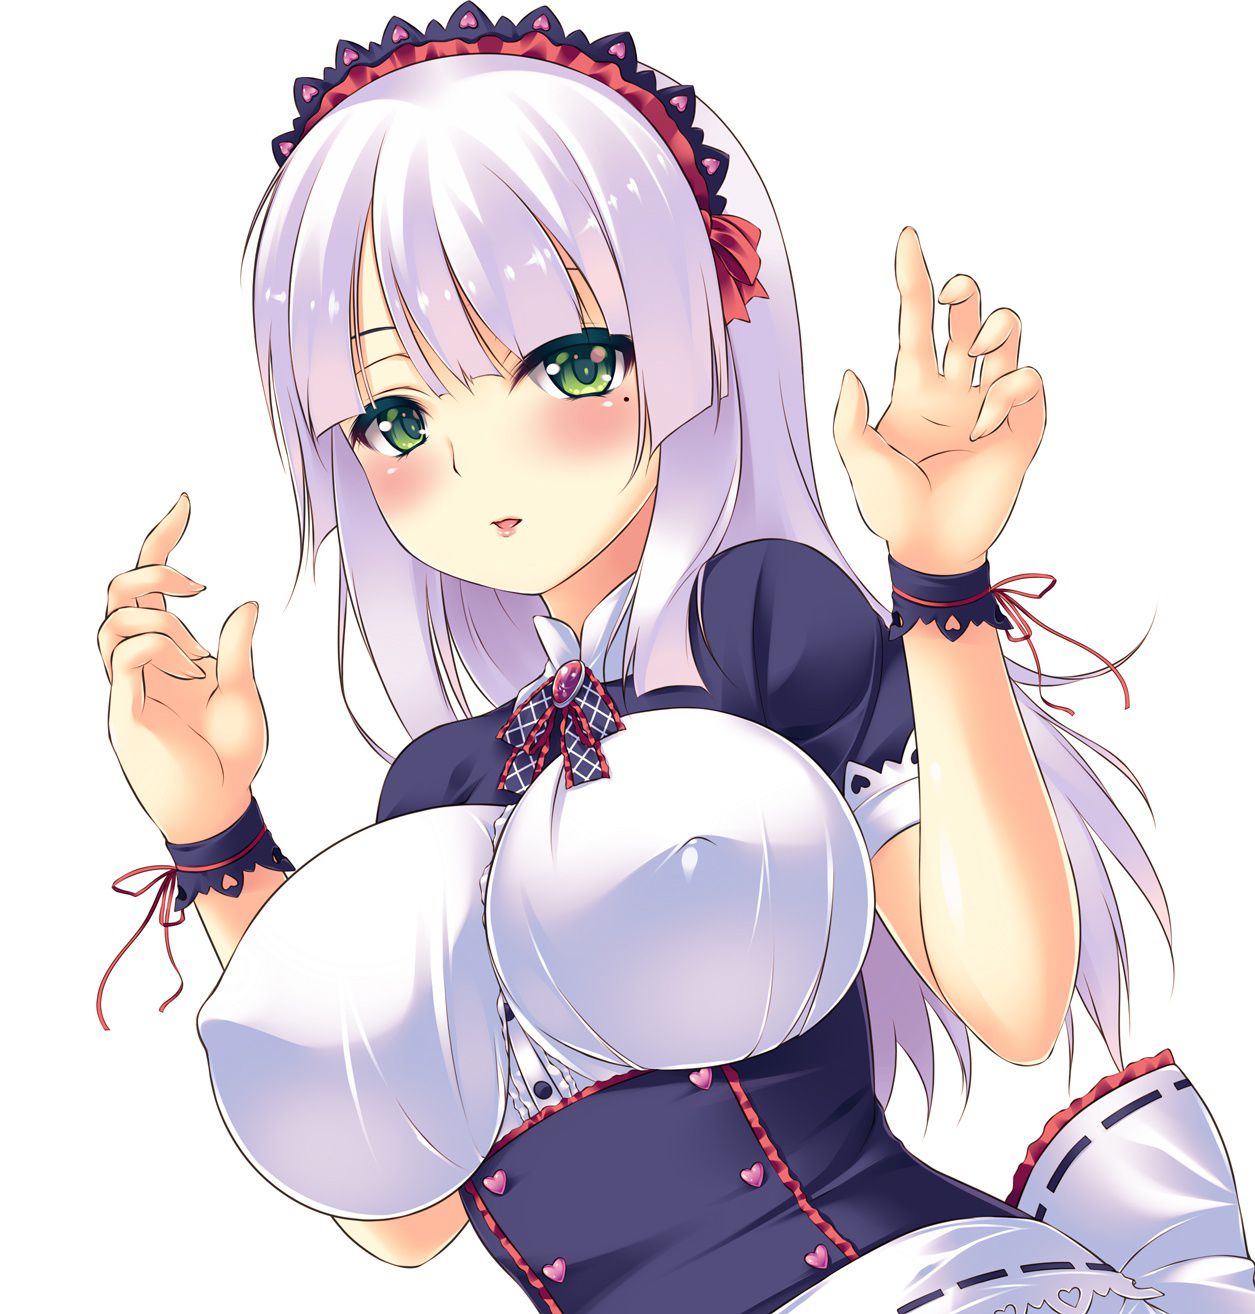 Cute Maid's Service Erotic Image Part 11 18